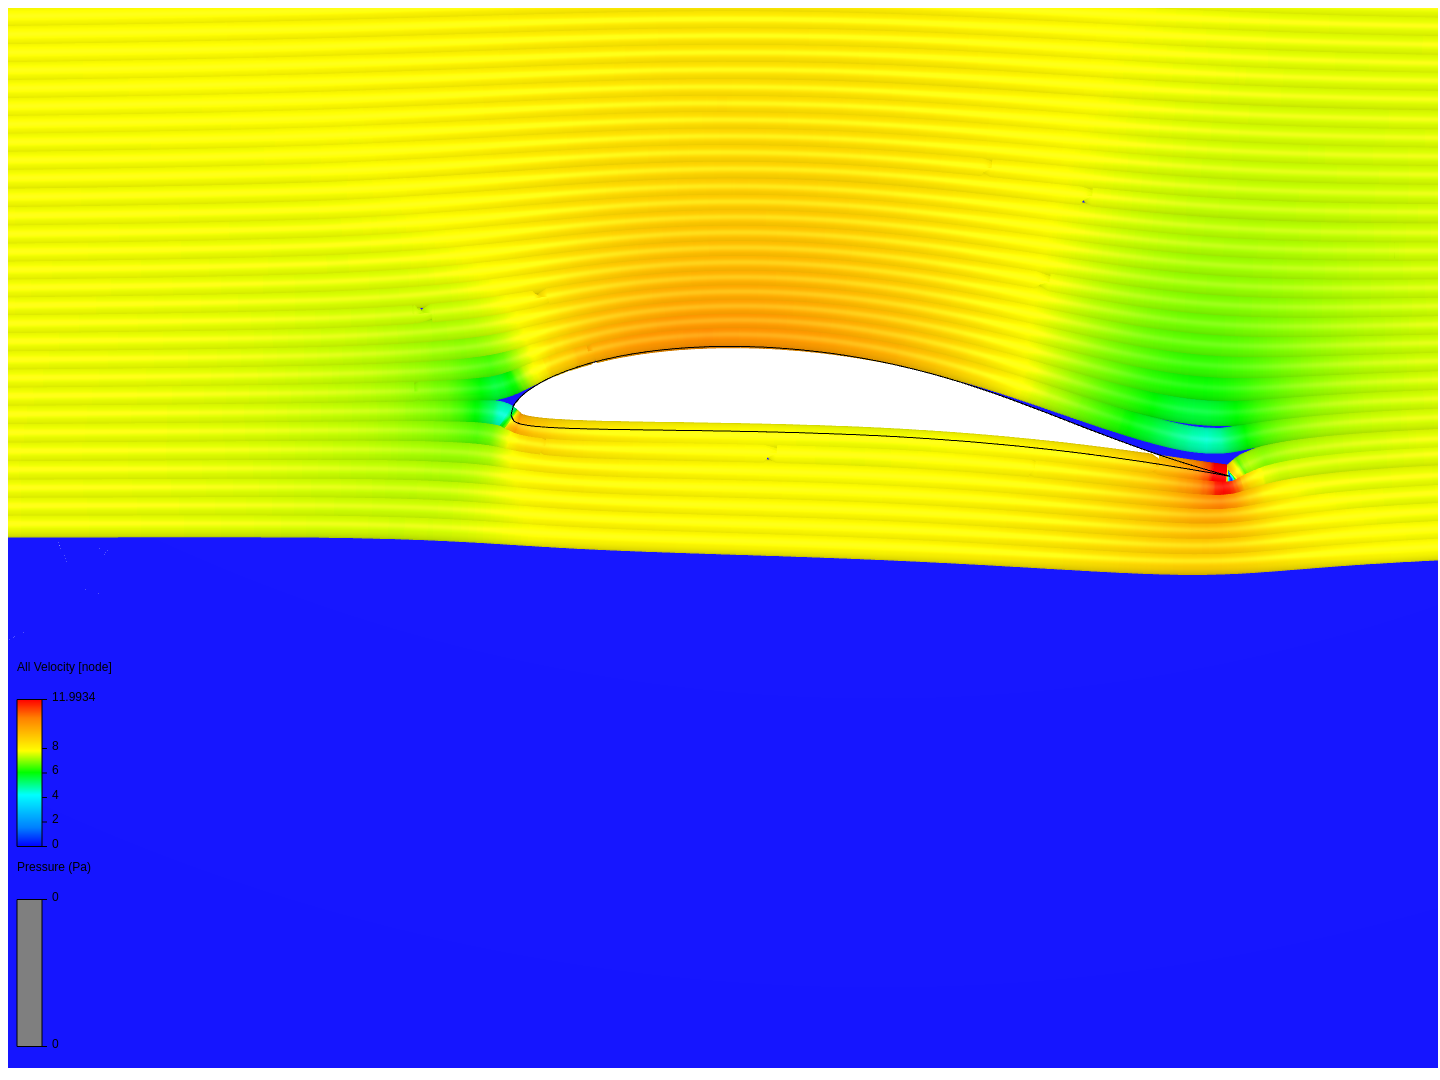 Airfoil simulation image